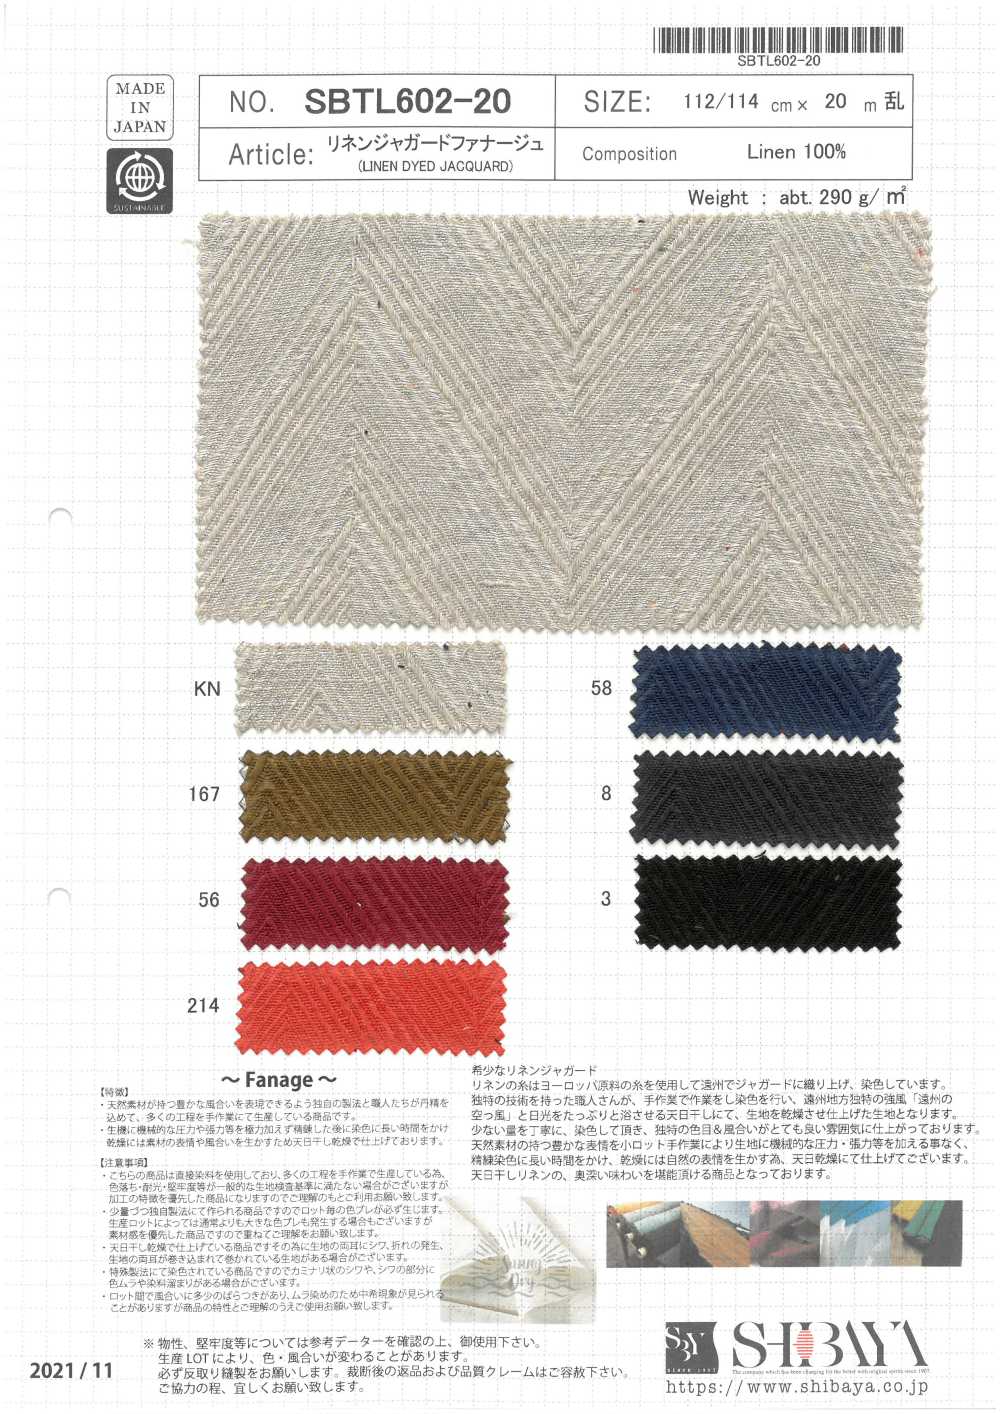 SBTL602-20 Lin Jacquard Fanage[Fabrication De Textile] SHIBAYA